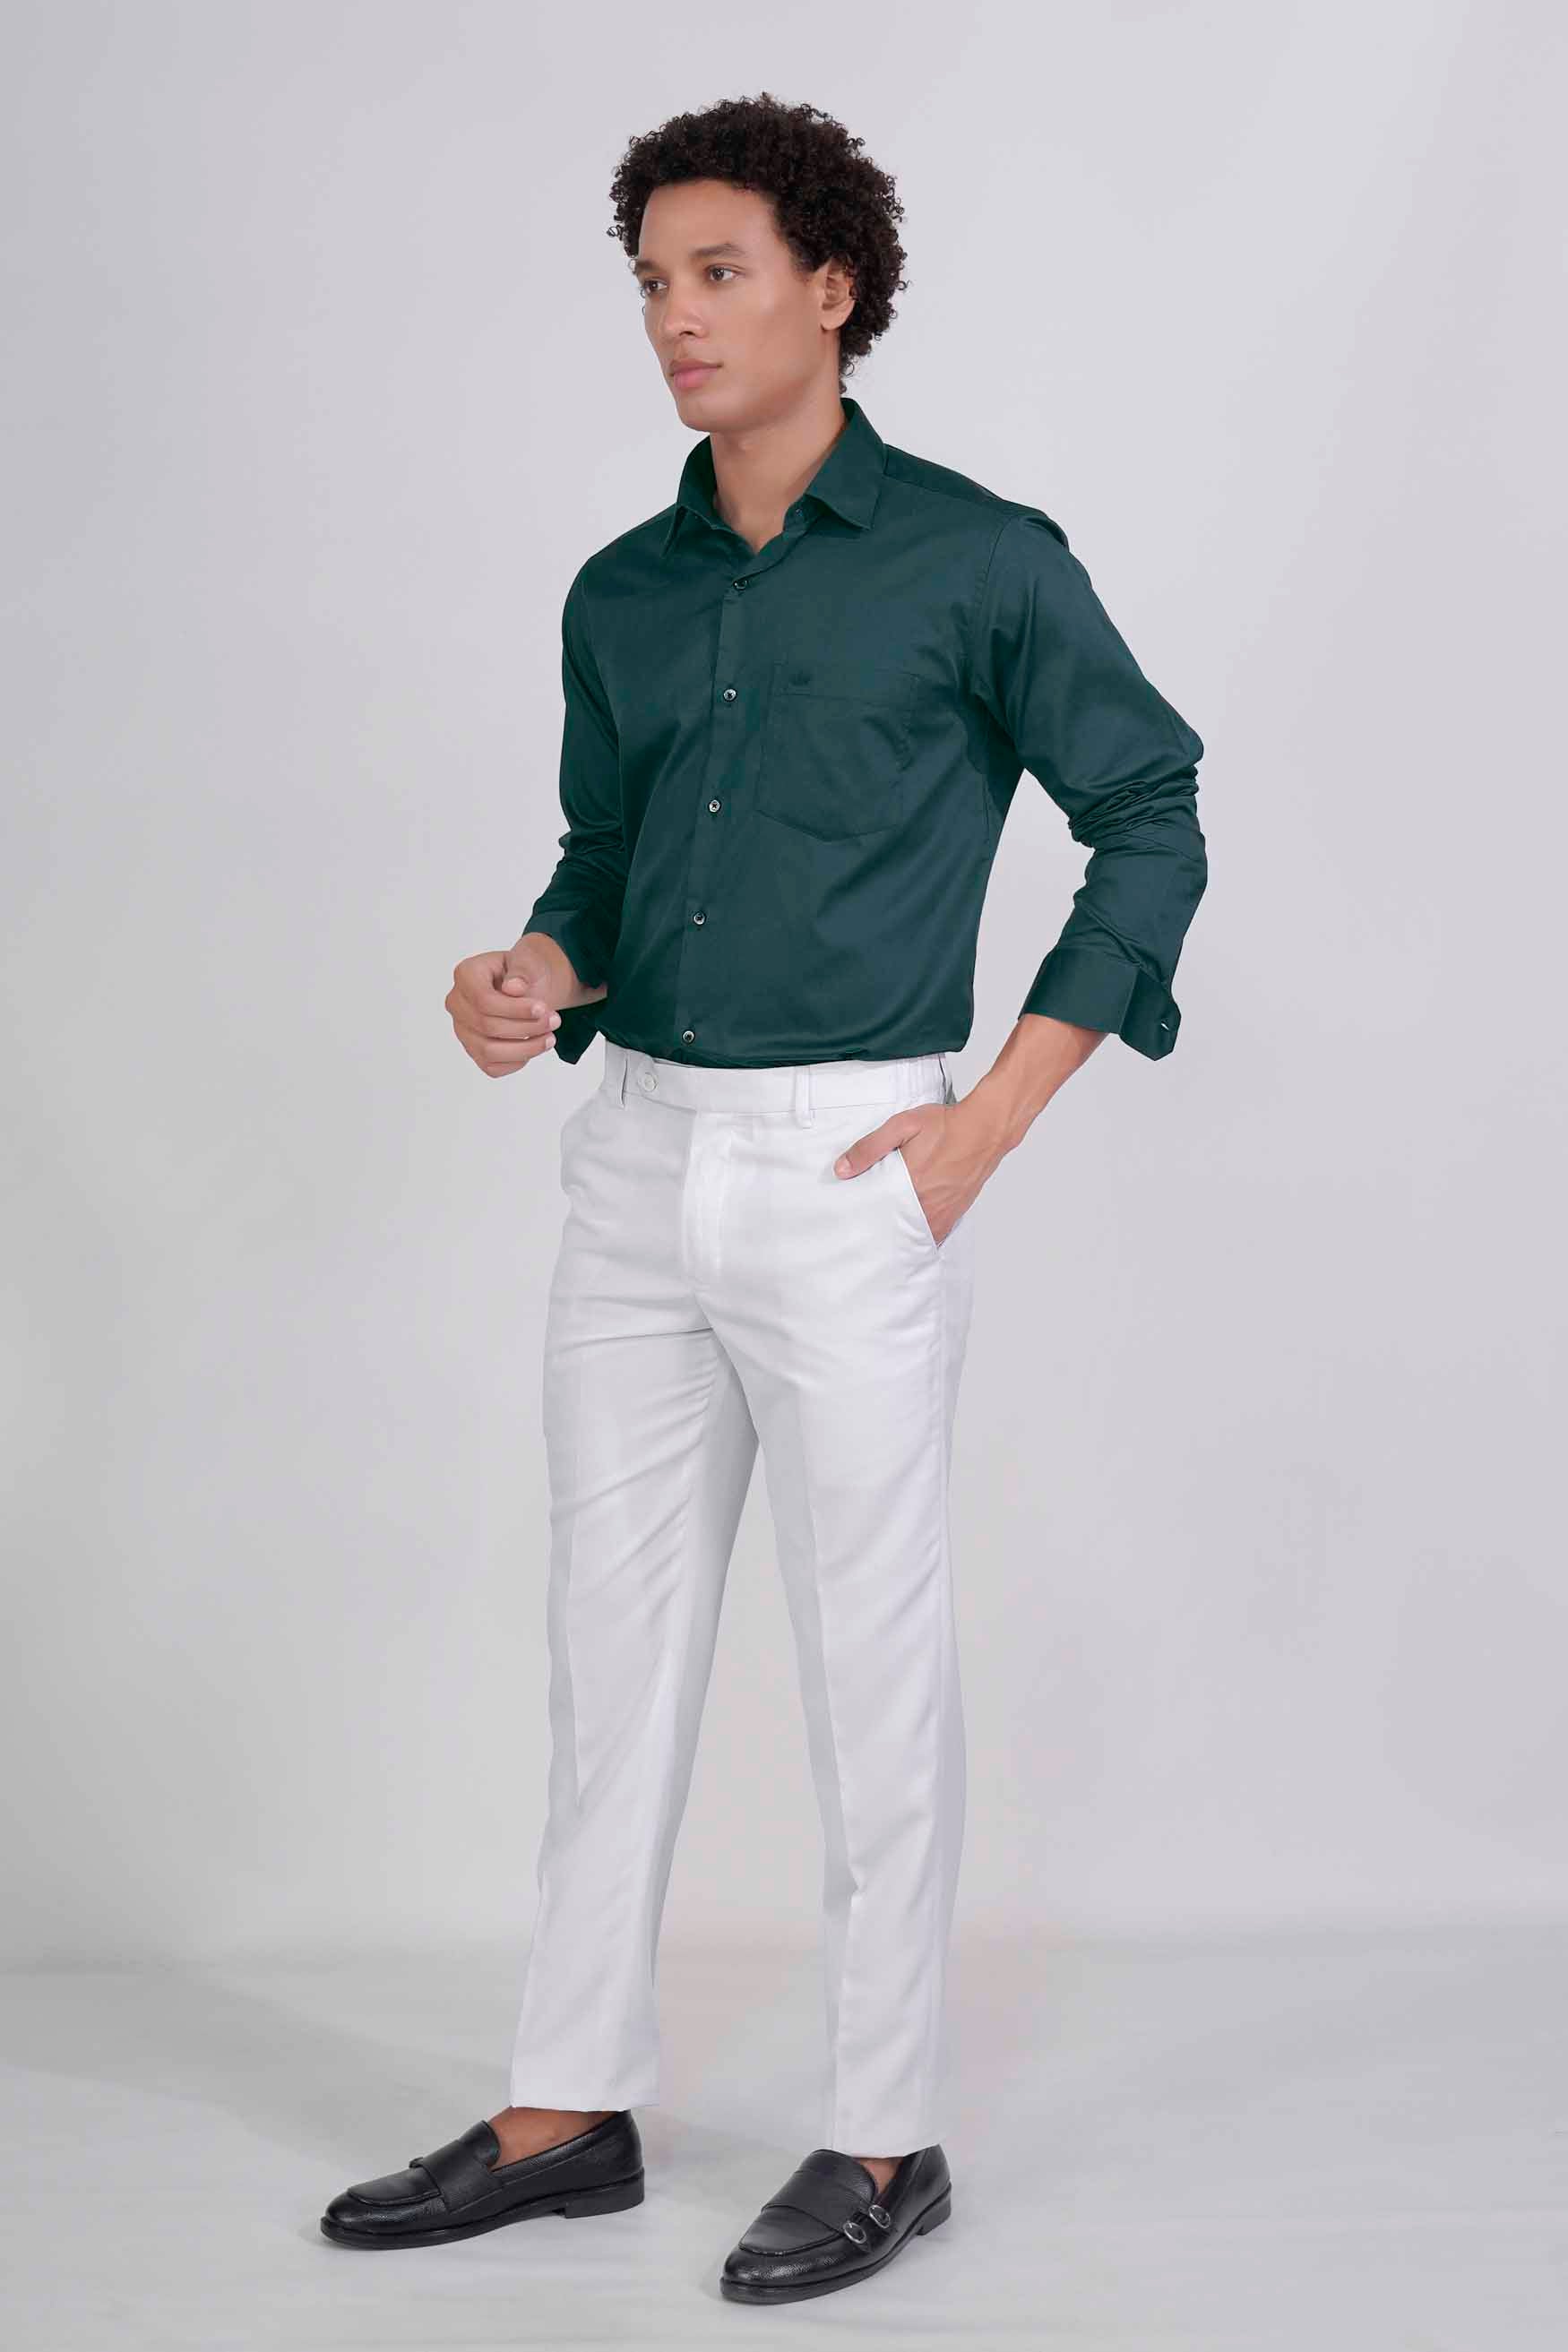 Buy Men Green Slim Fit Formal Full Sleeves Formal Shirt Online - 286581 |  Peter England